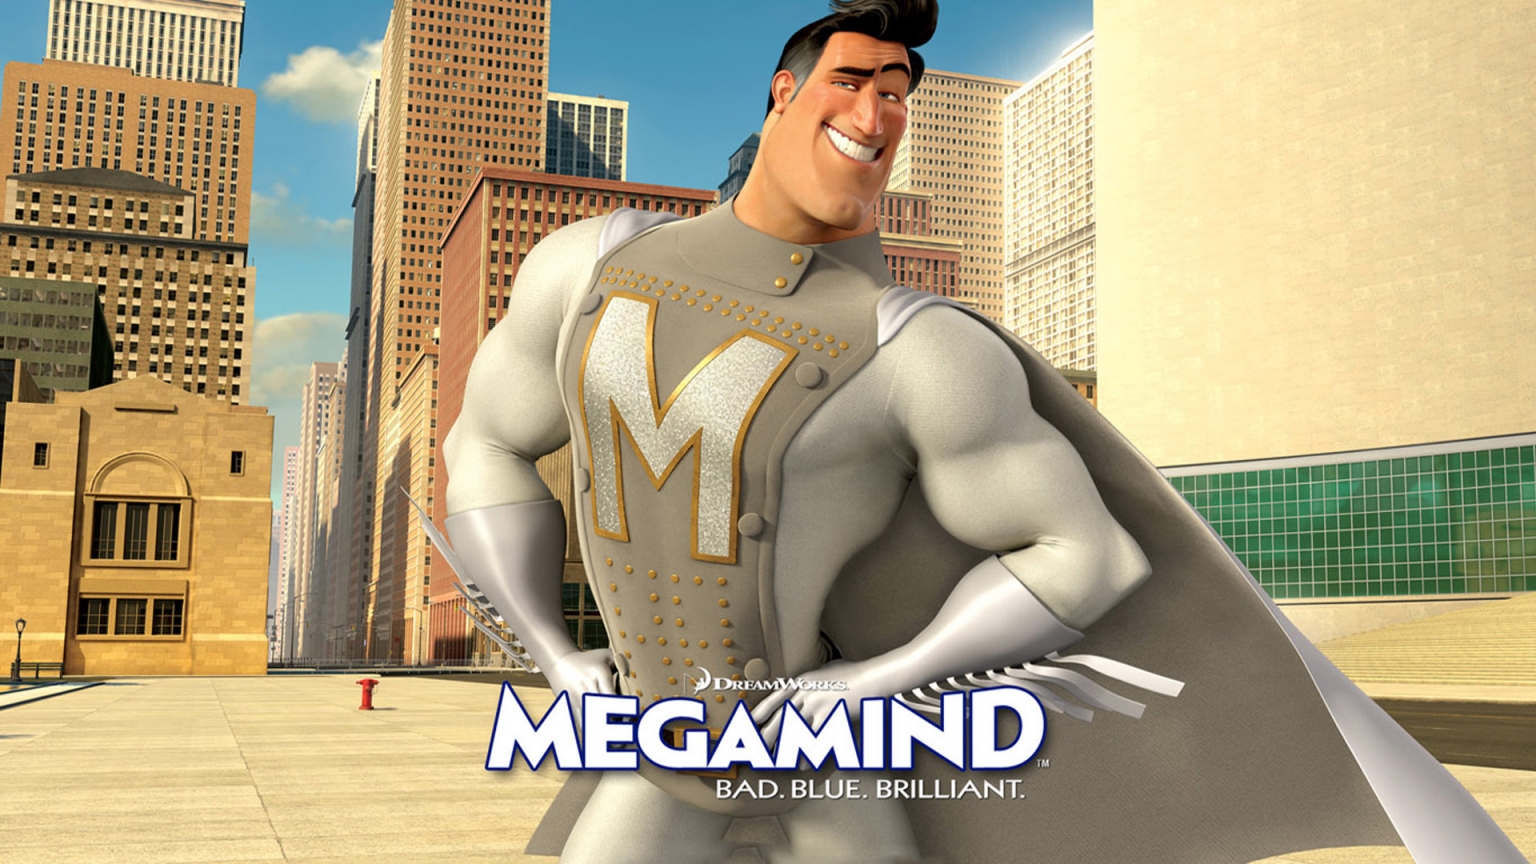 Megamind Metro Man for 1536 x 864 HDTV resolution